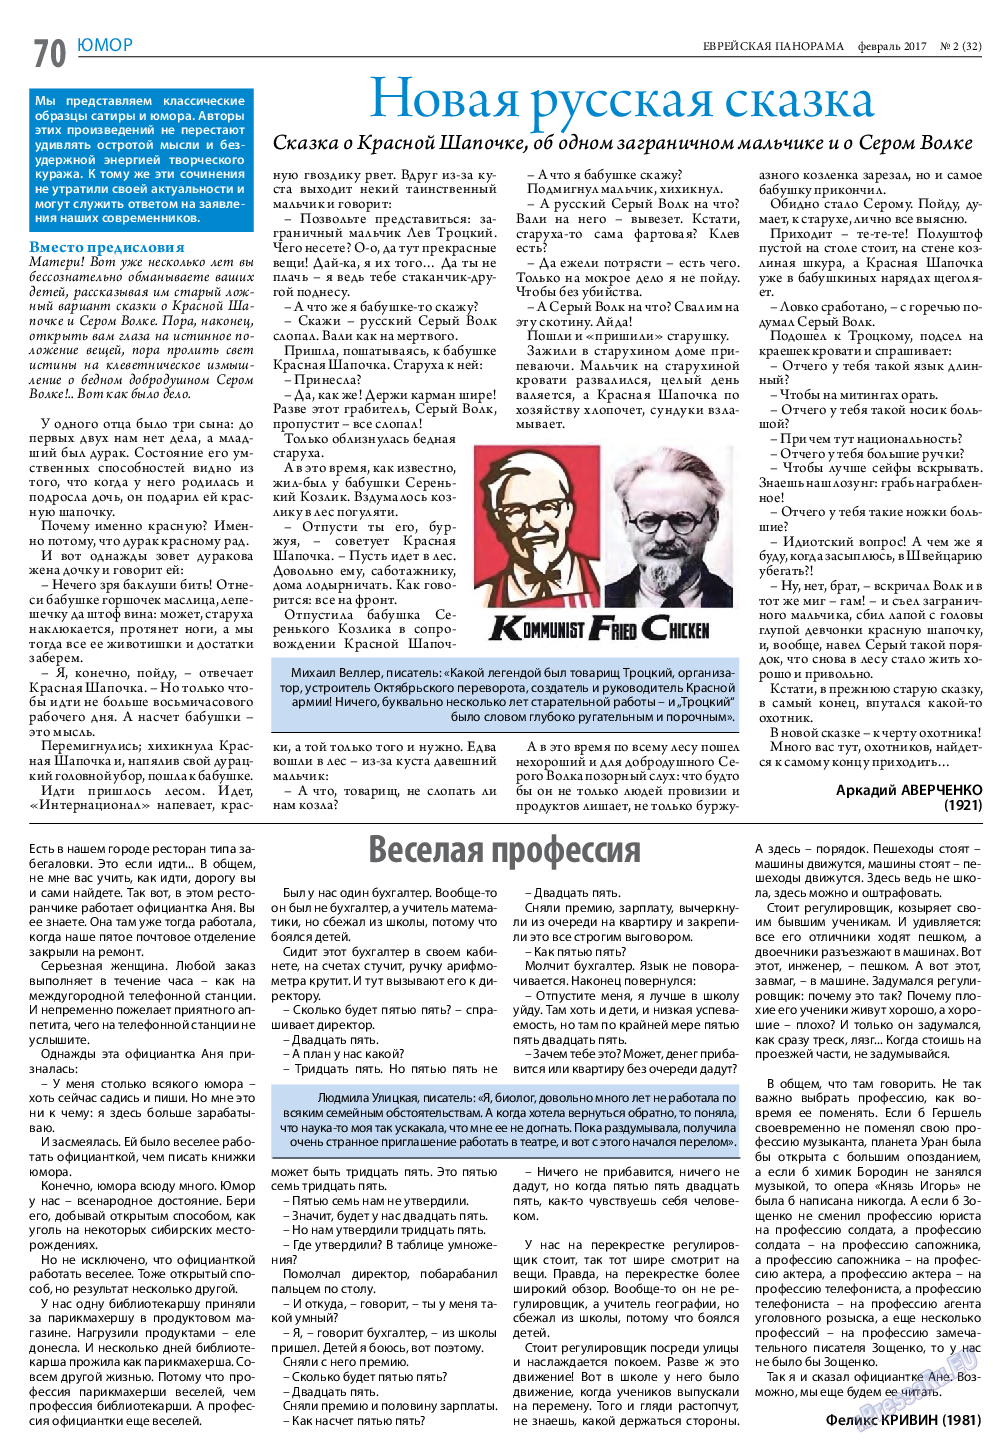 Еврейская панорама, газета. 2017 №2 стр.70